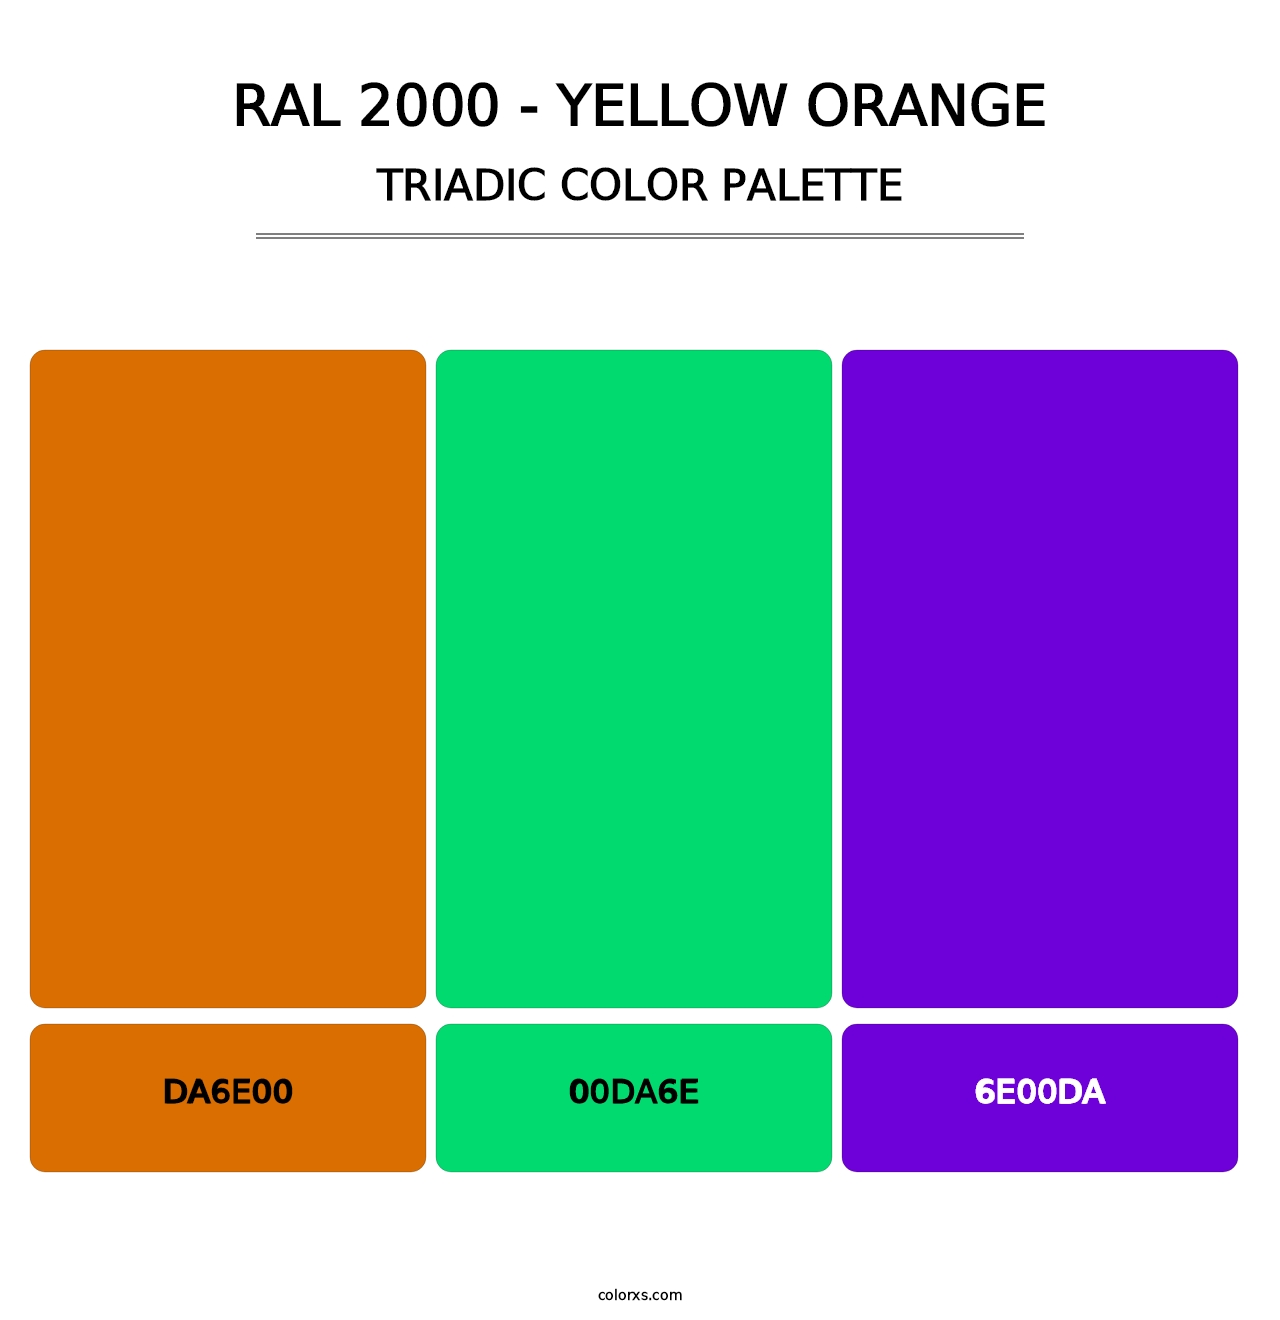 RAL 2000 - Yellow Orange - Triadic Color Palette